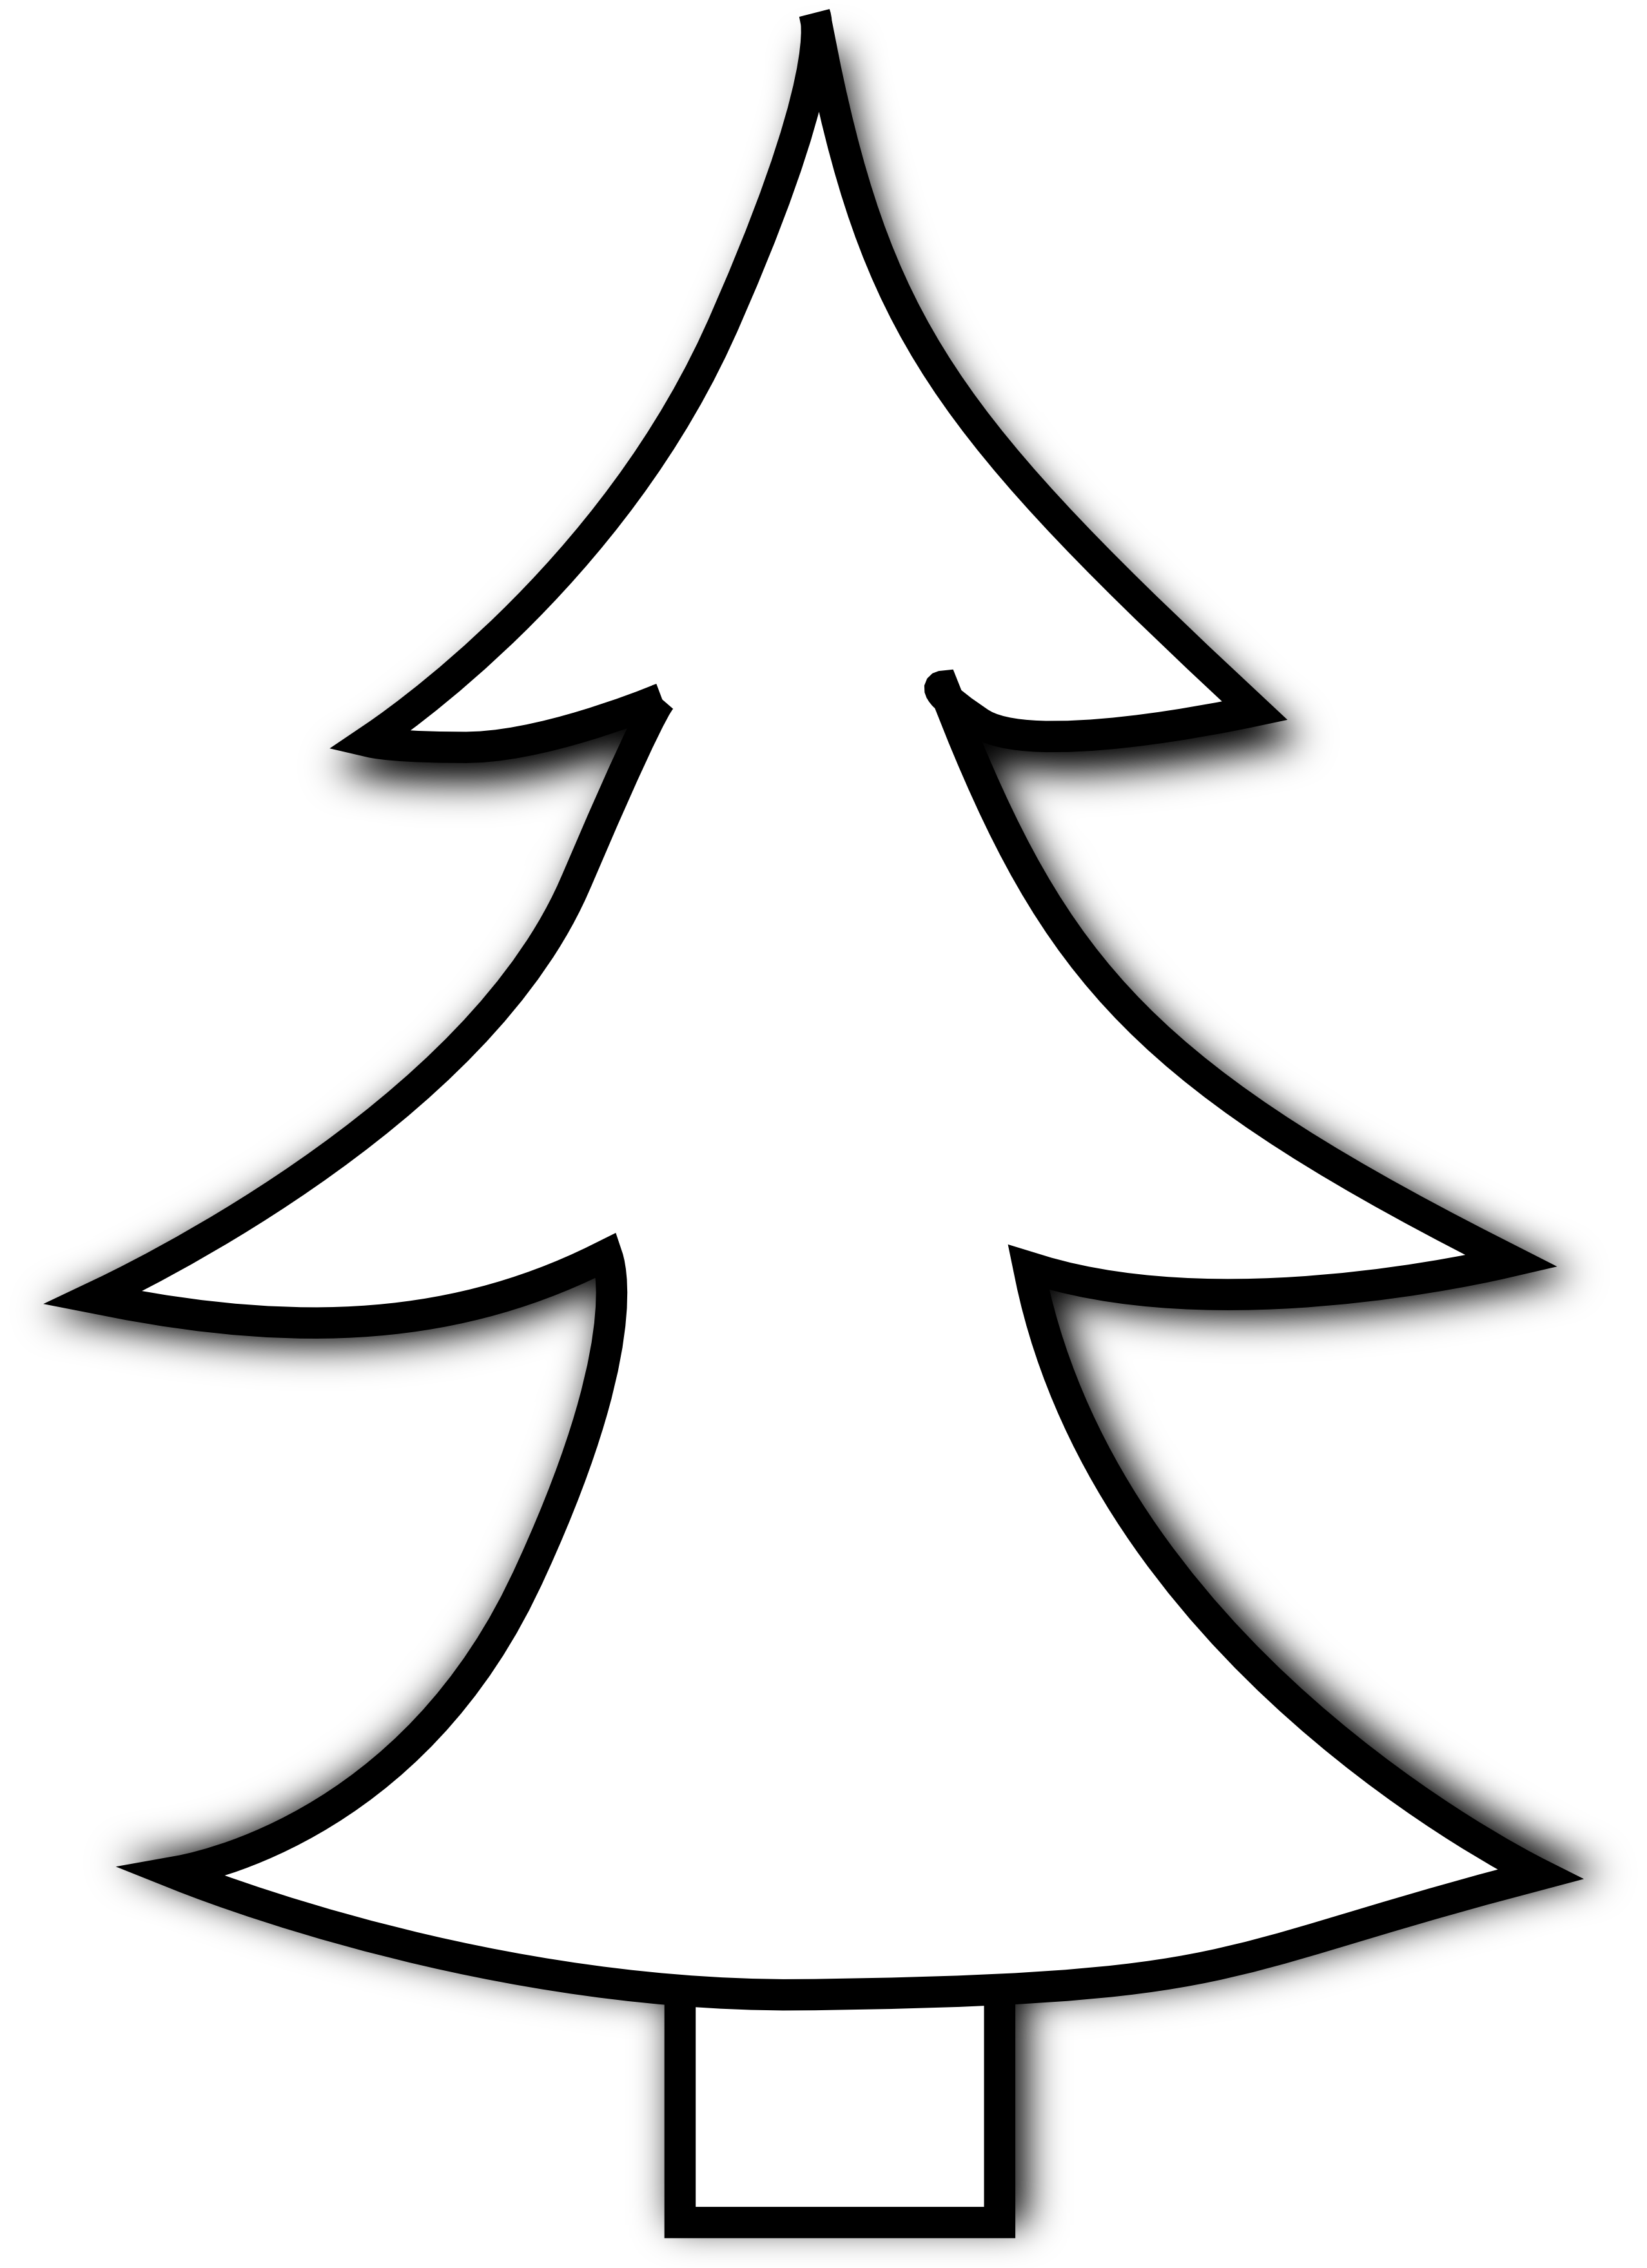 White Christmas Tree Clipart.